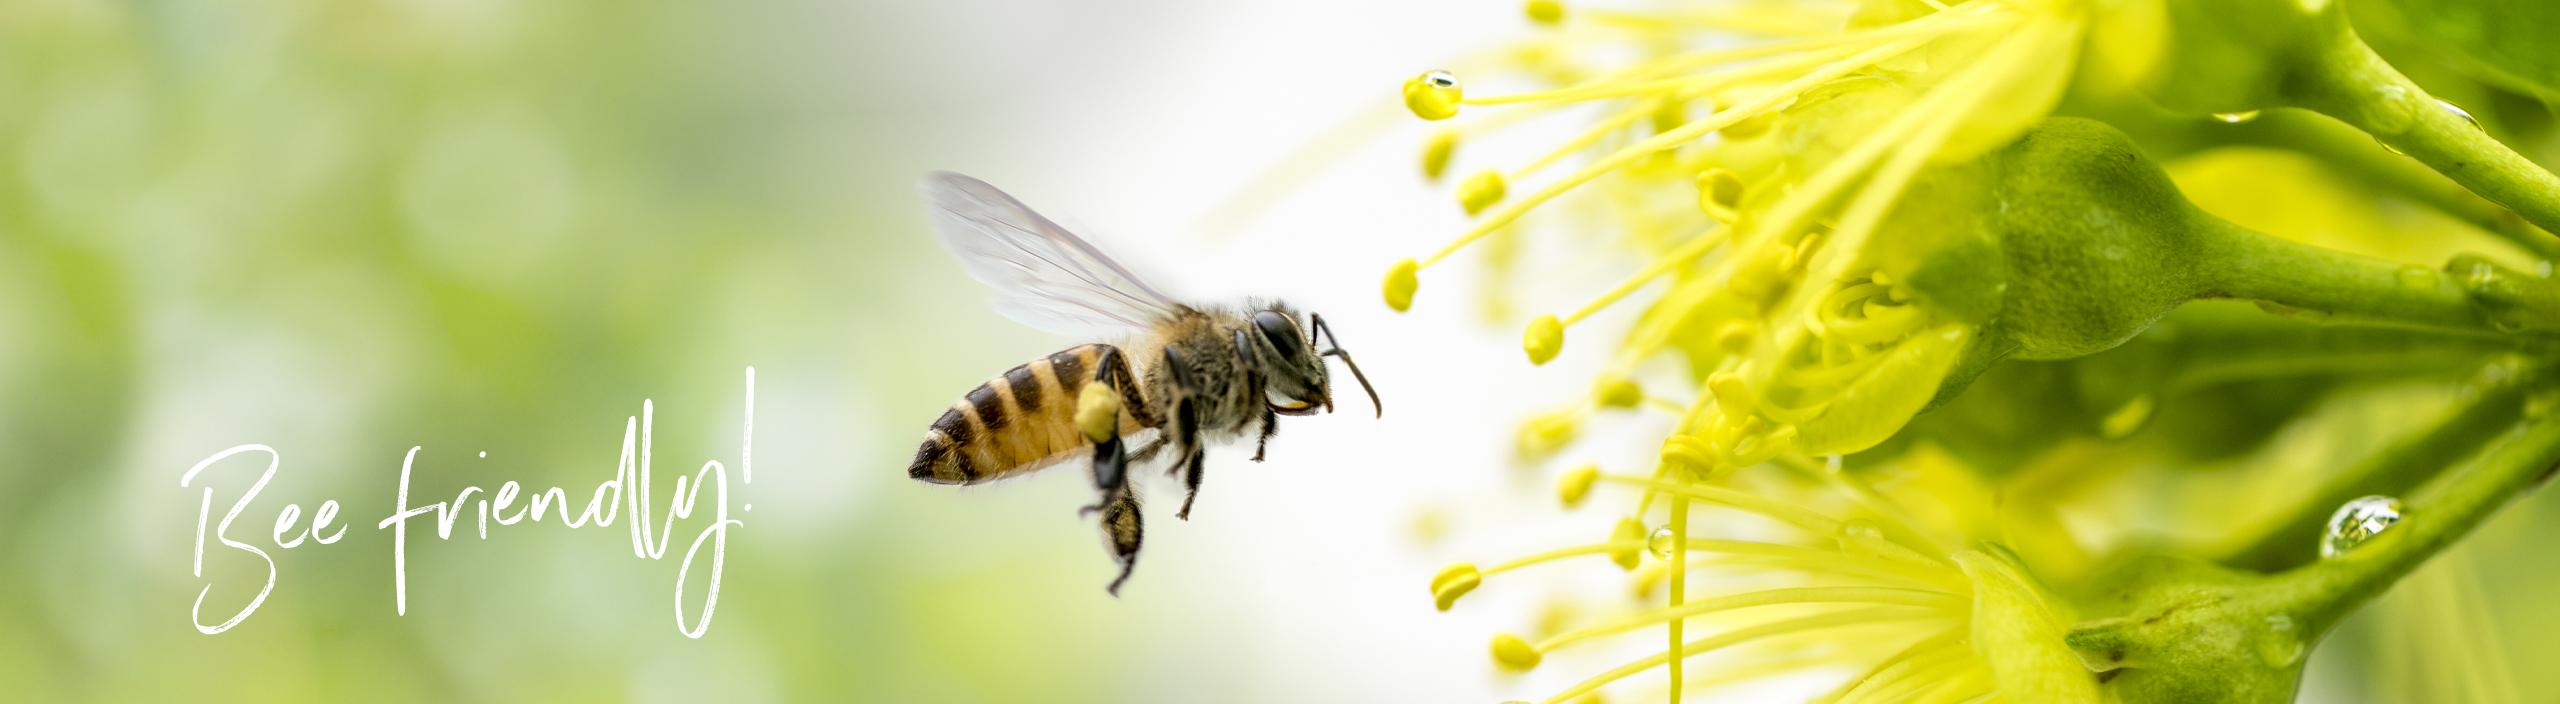 Bee flies towards a blossom